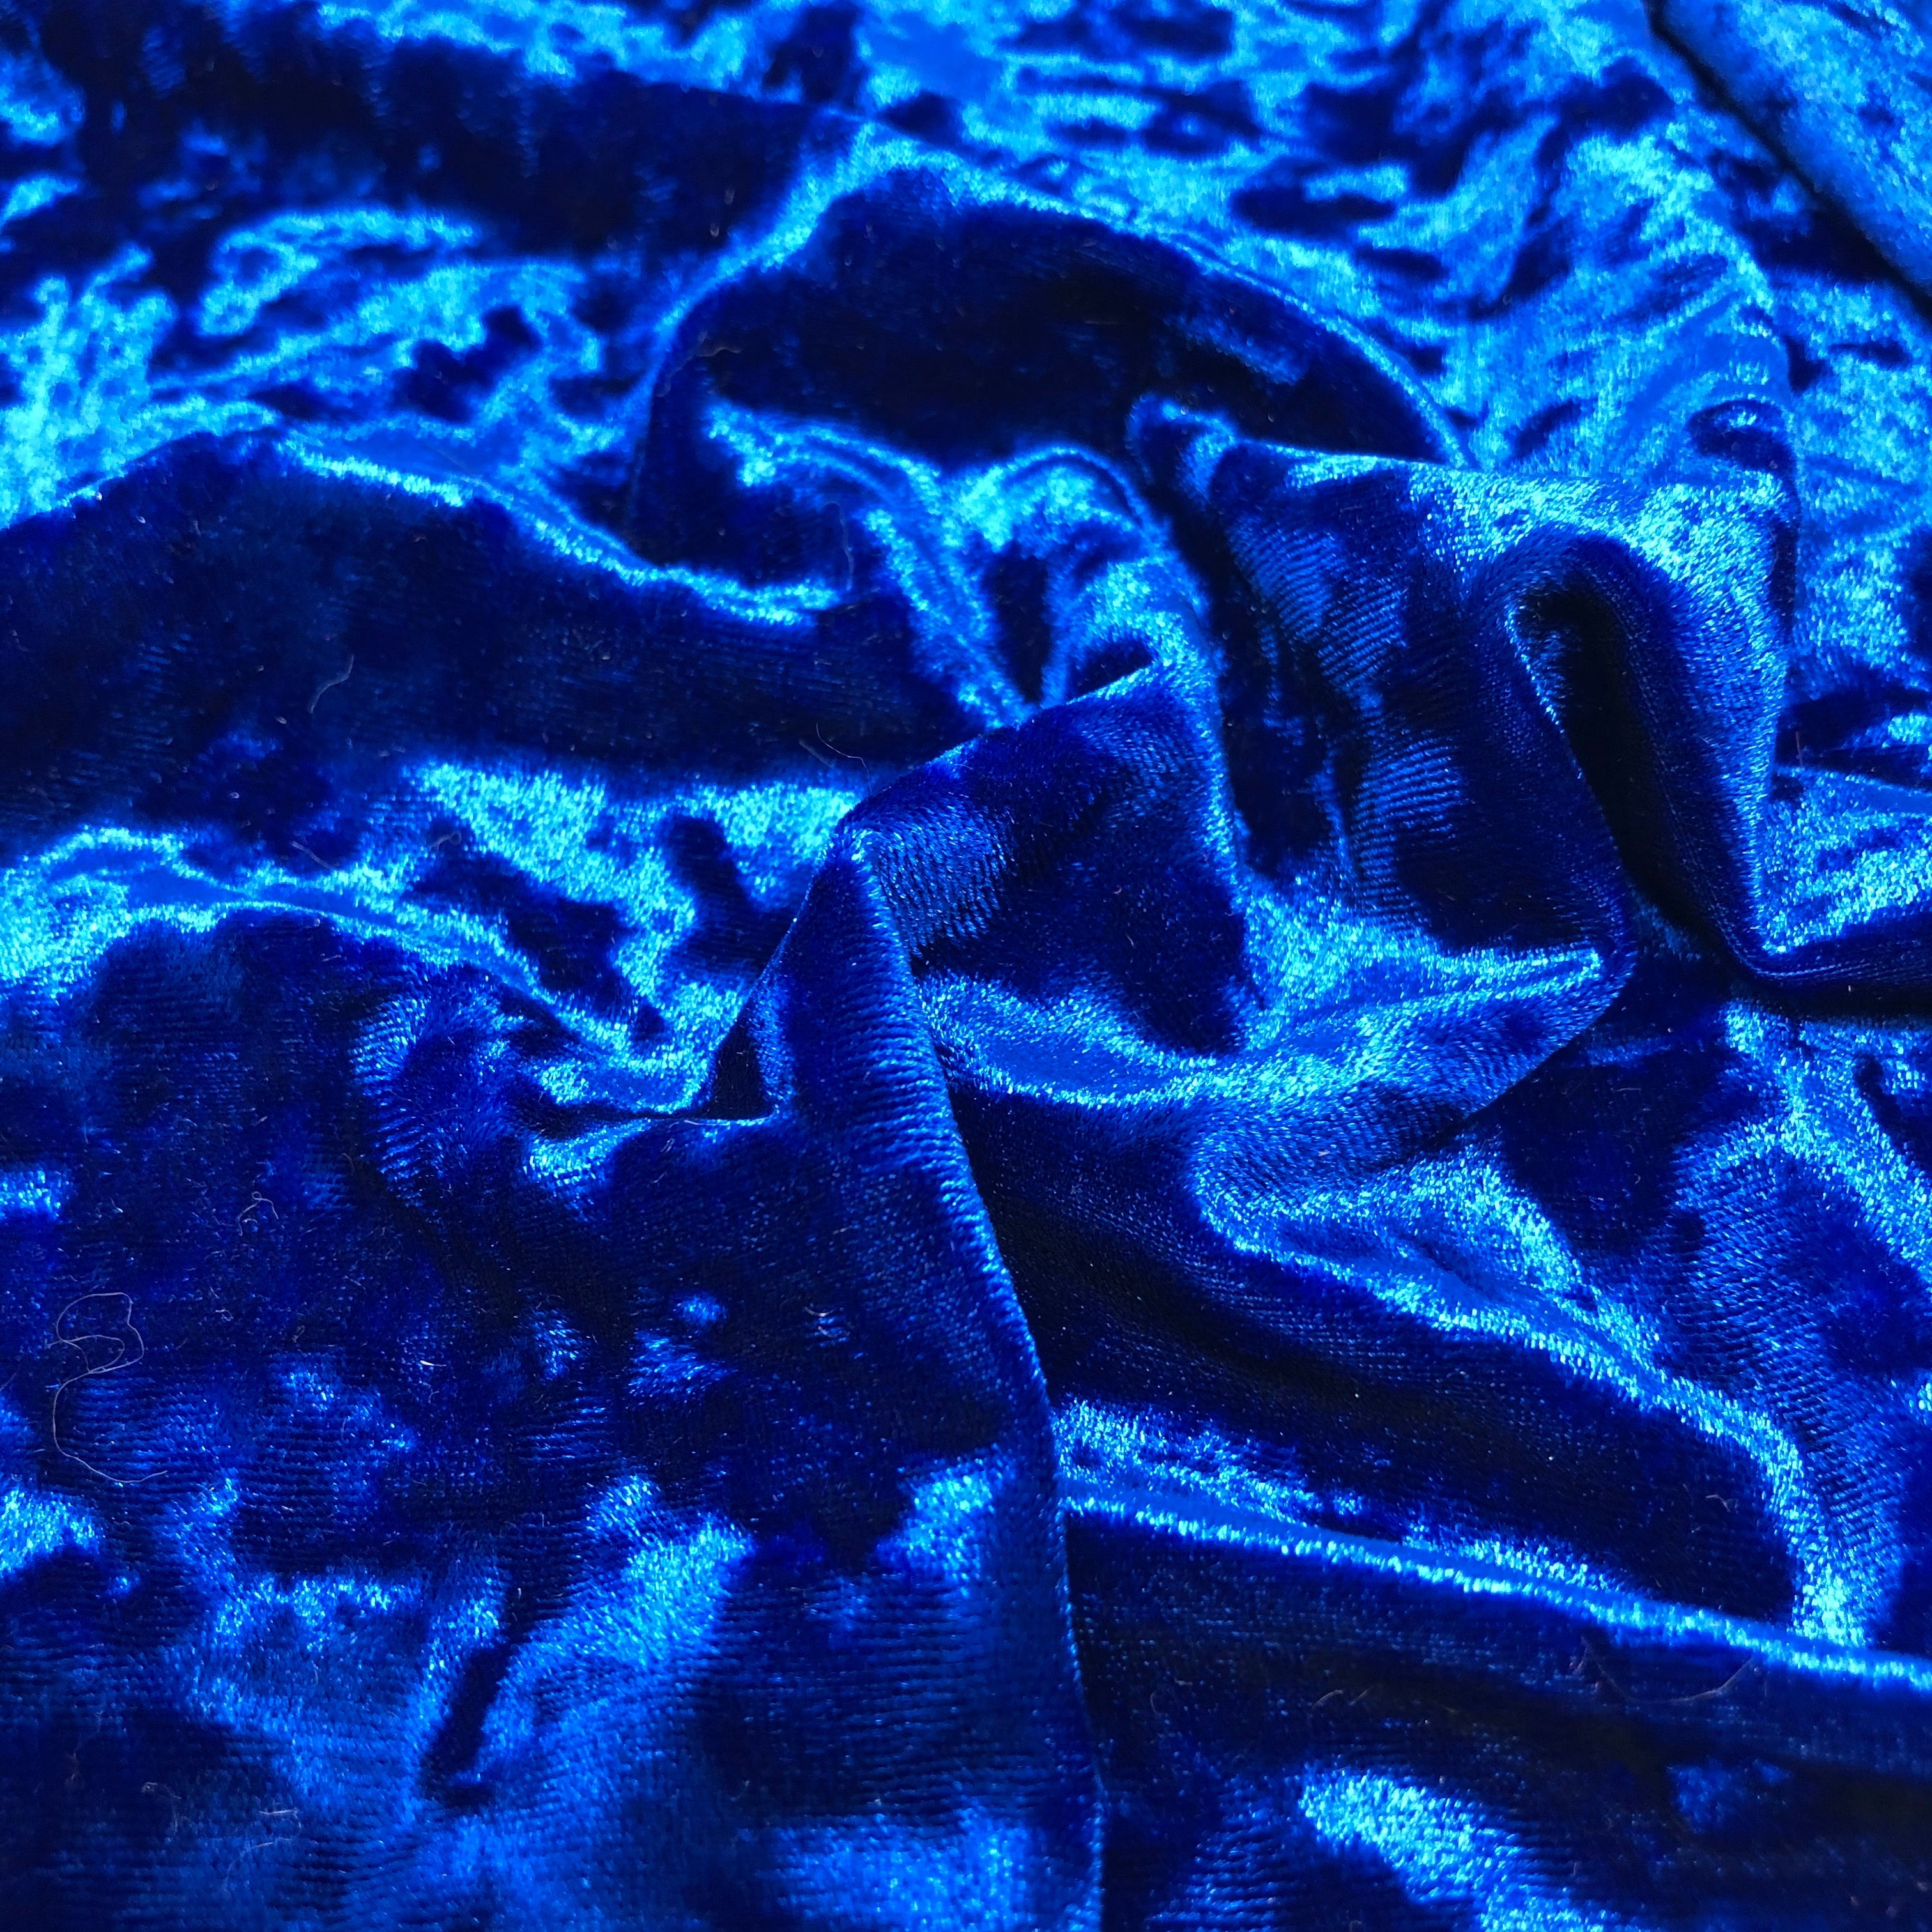 Royal Blue Crushed Velvet Fabric 58'' PRICE PER METER